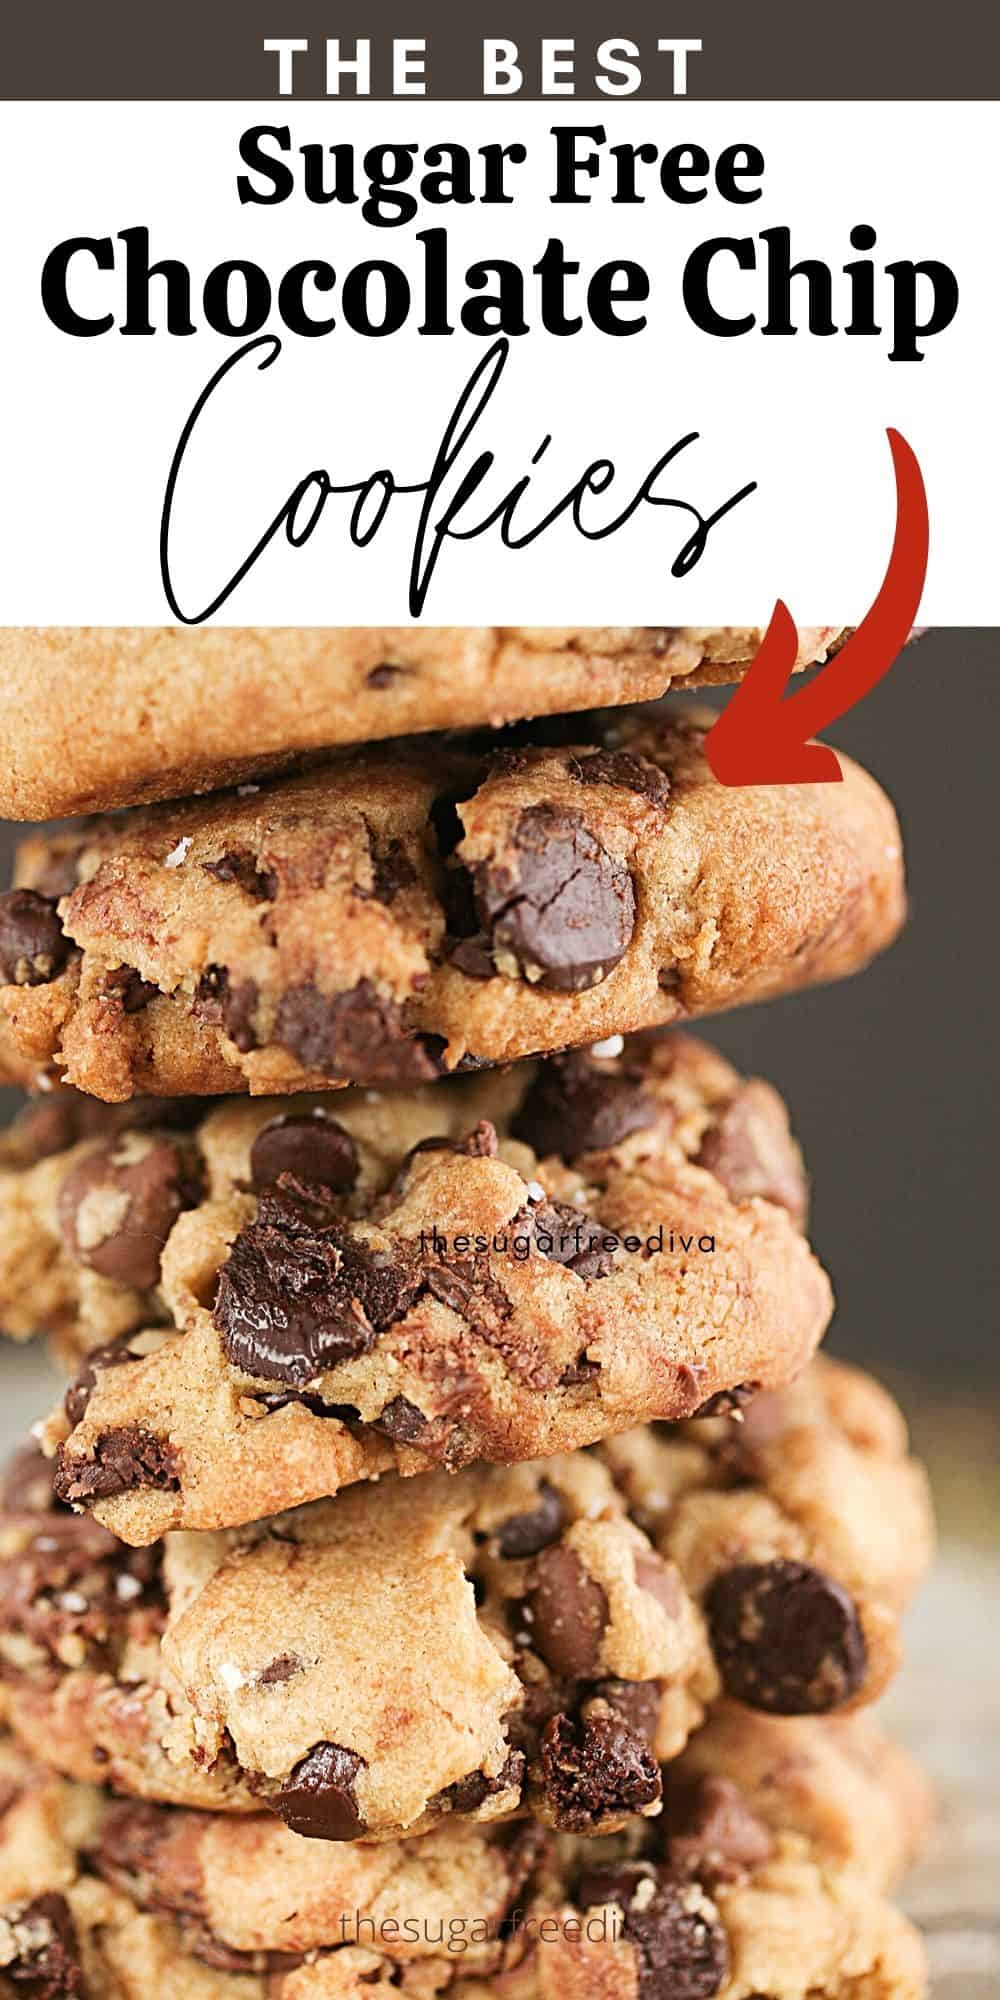 The Best Sugar Free Chocolate Chip Cookies Recipe